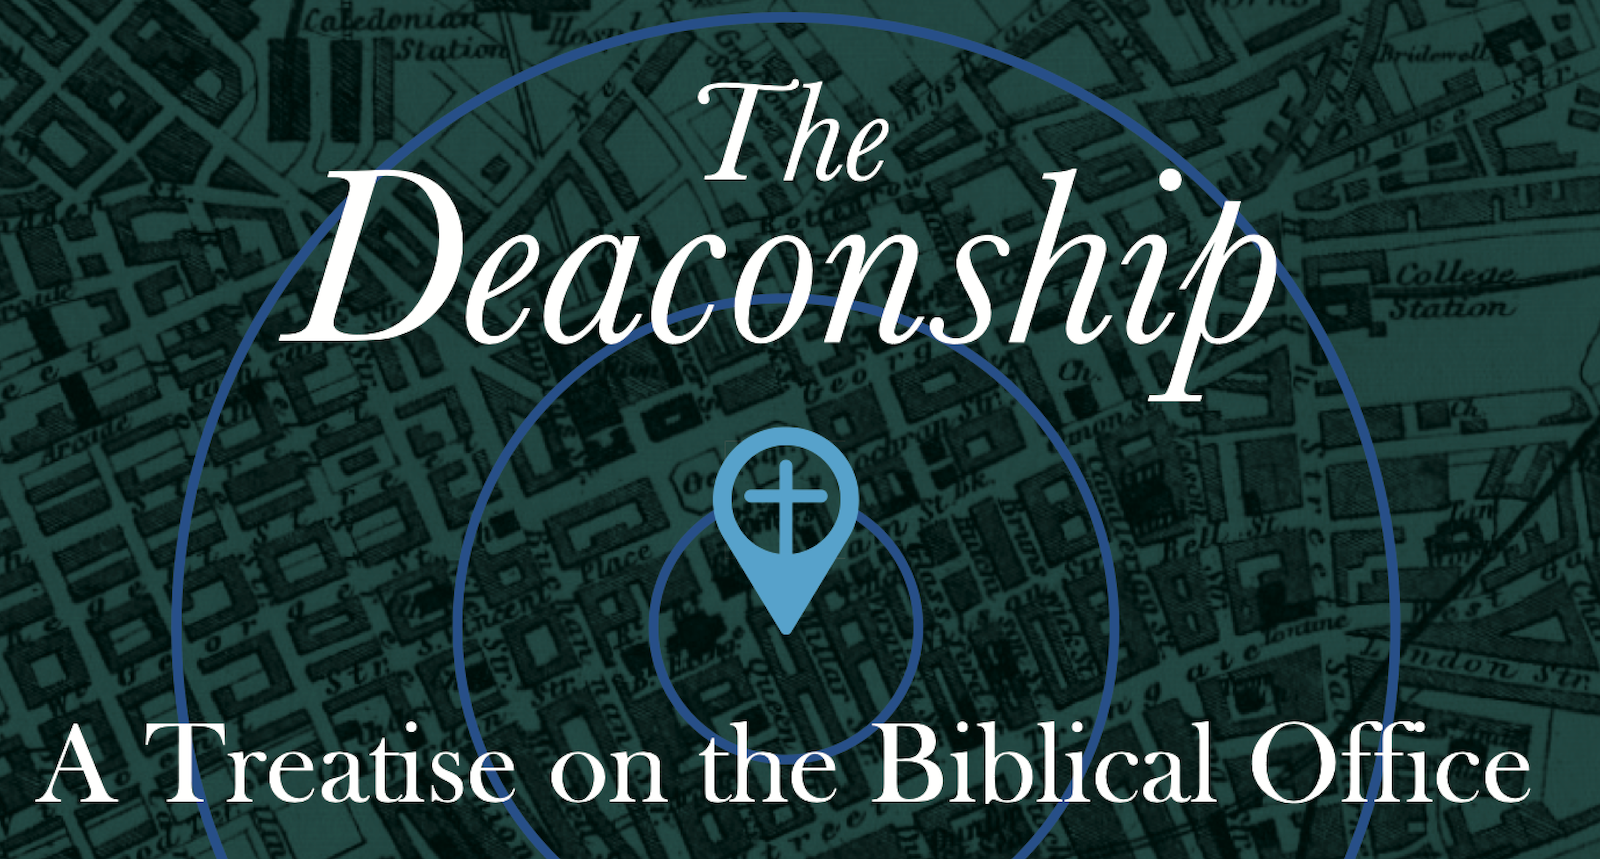 New paperback edition of John G. Lorimer's classic work "The Deaconship".